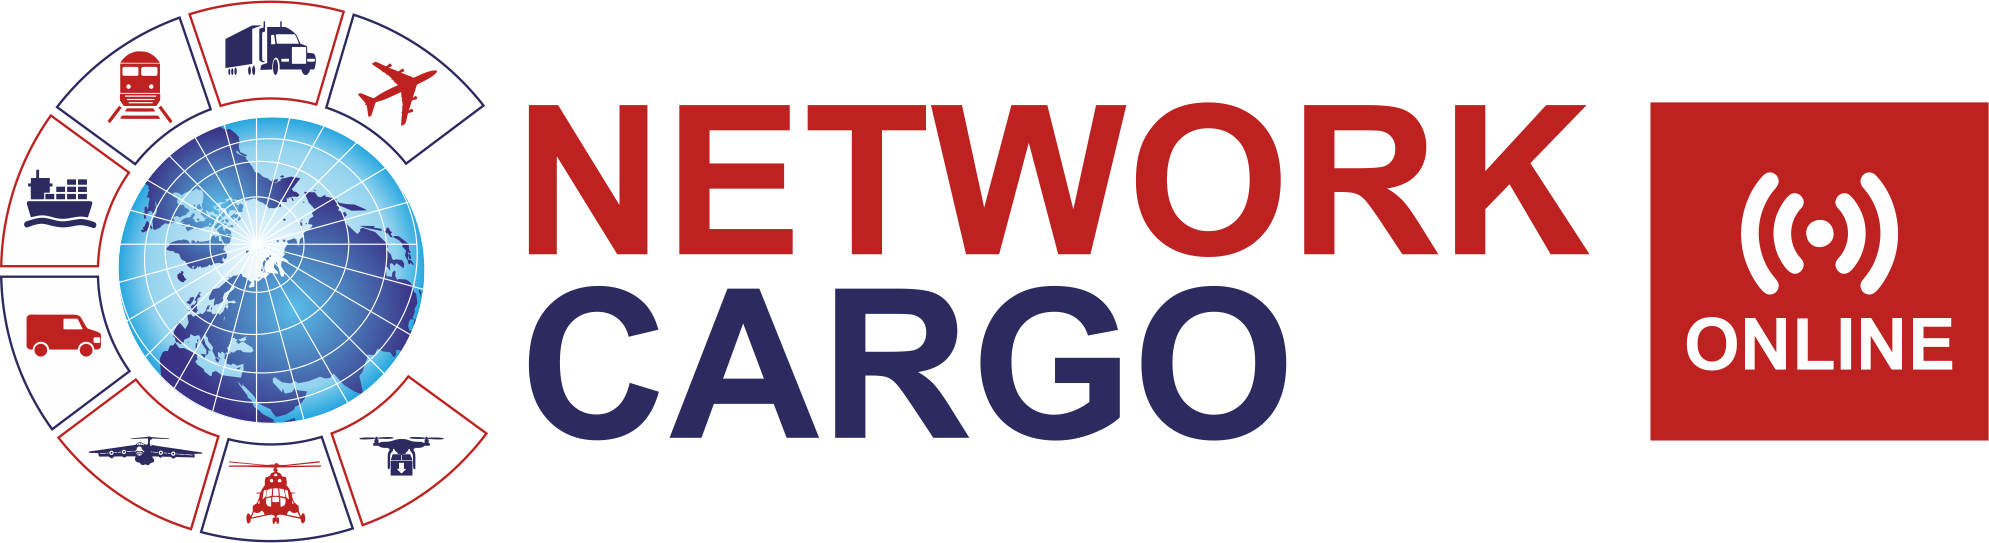 NETWORK CARGO ONLINE - Форум по развитию грузовых маршрутов 2020